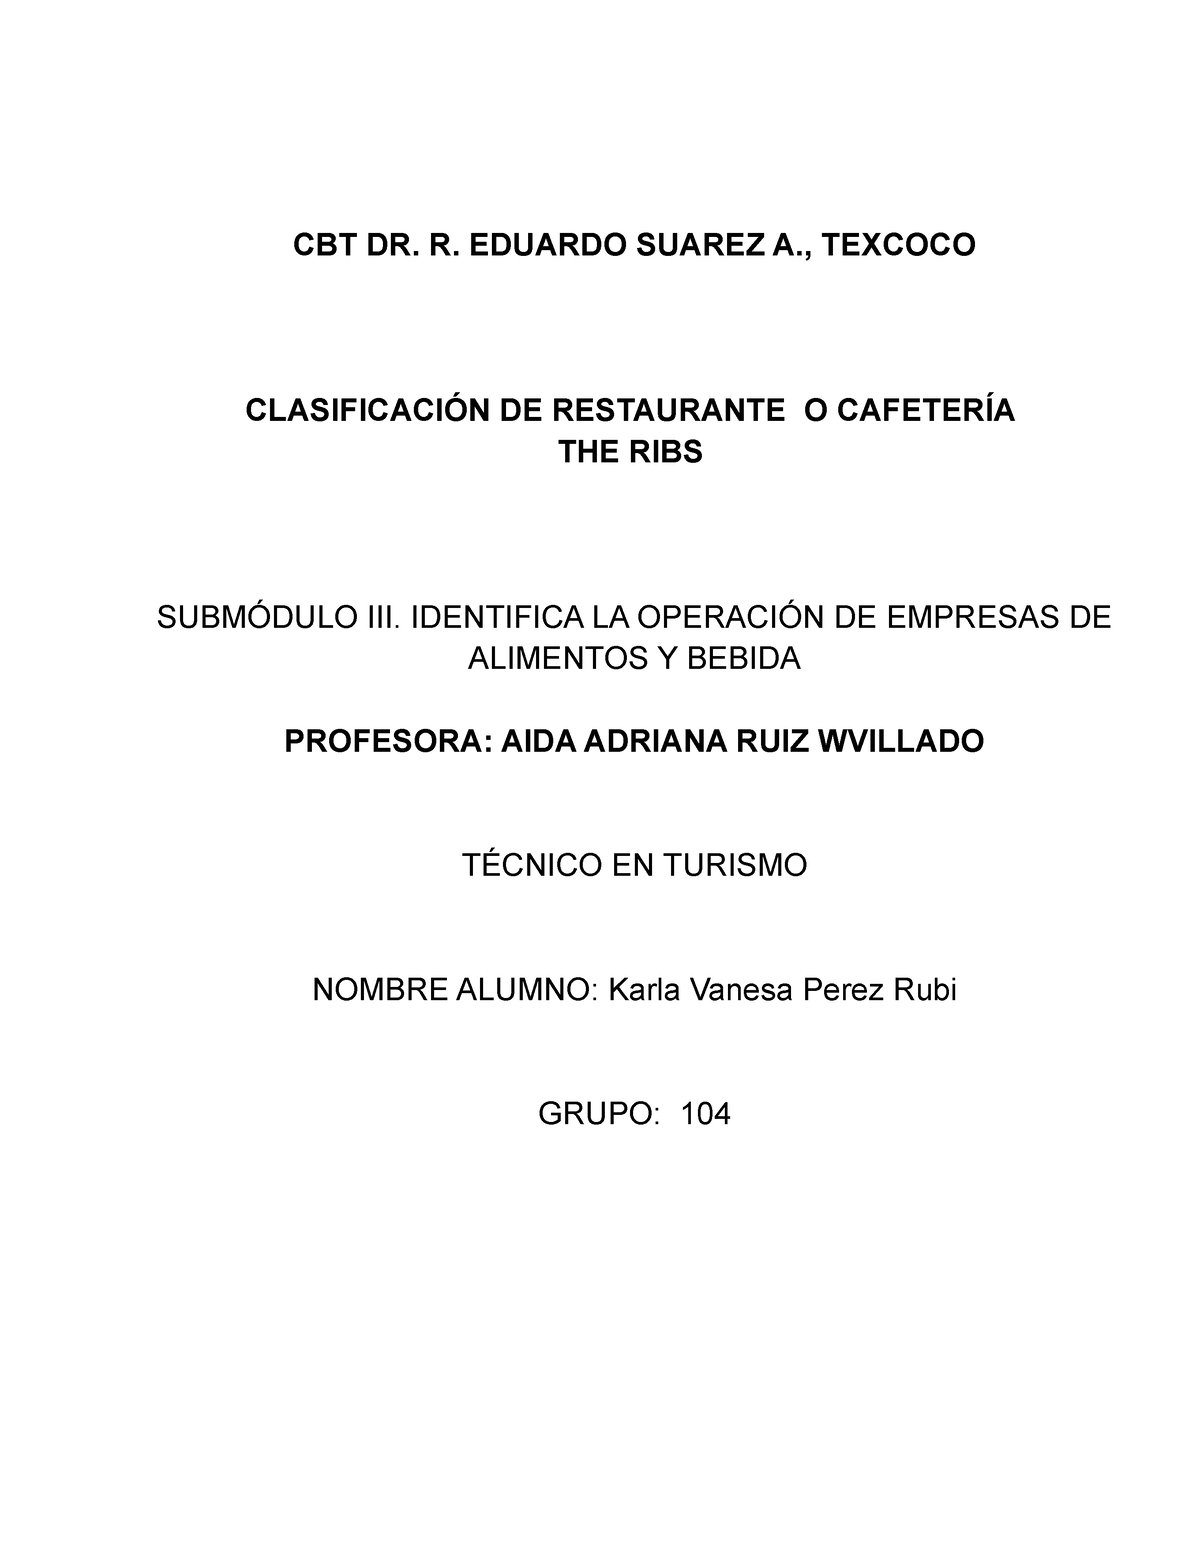 ClasificacióN DE Restaurante O Cafeteria CON Ejemplo 2023 OK 2 - CBT DR. R.  EDUARDO SUAREZ A., - Studocu